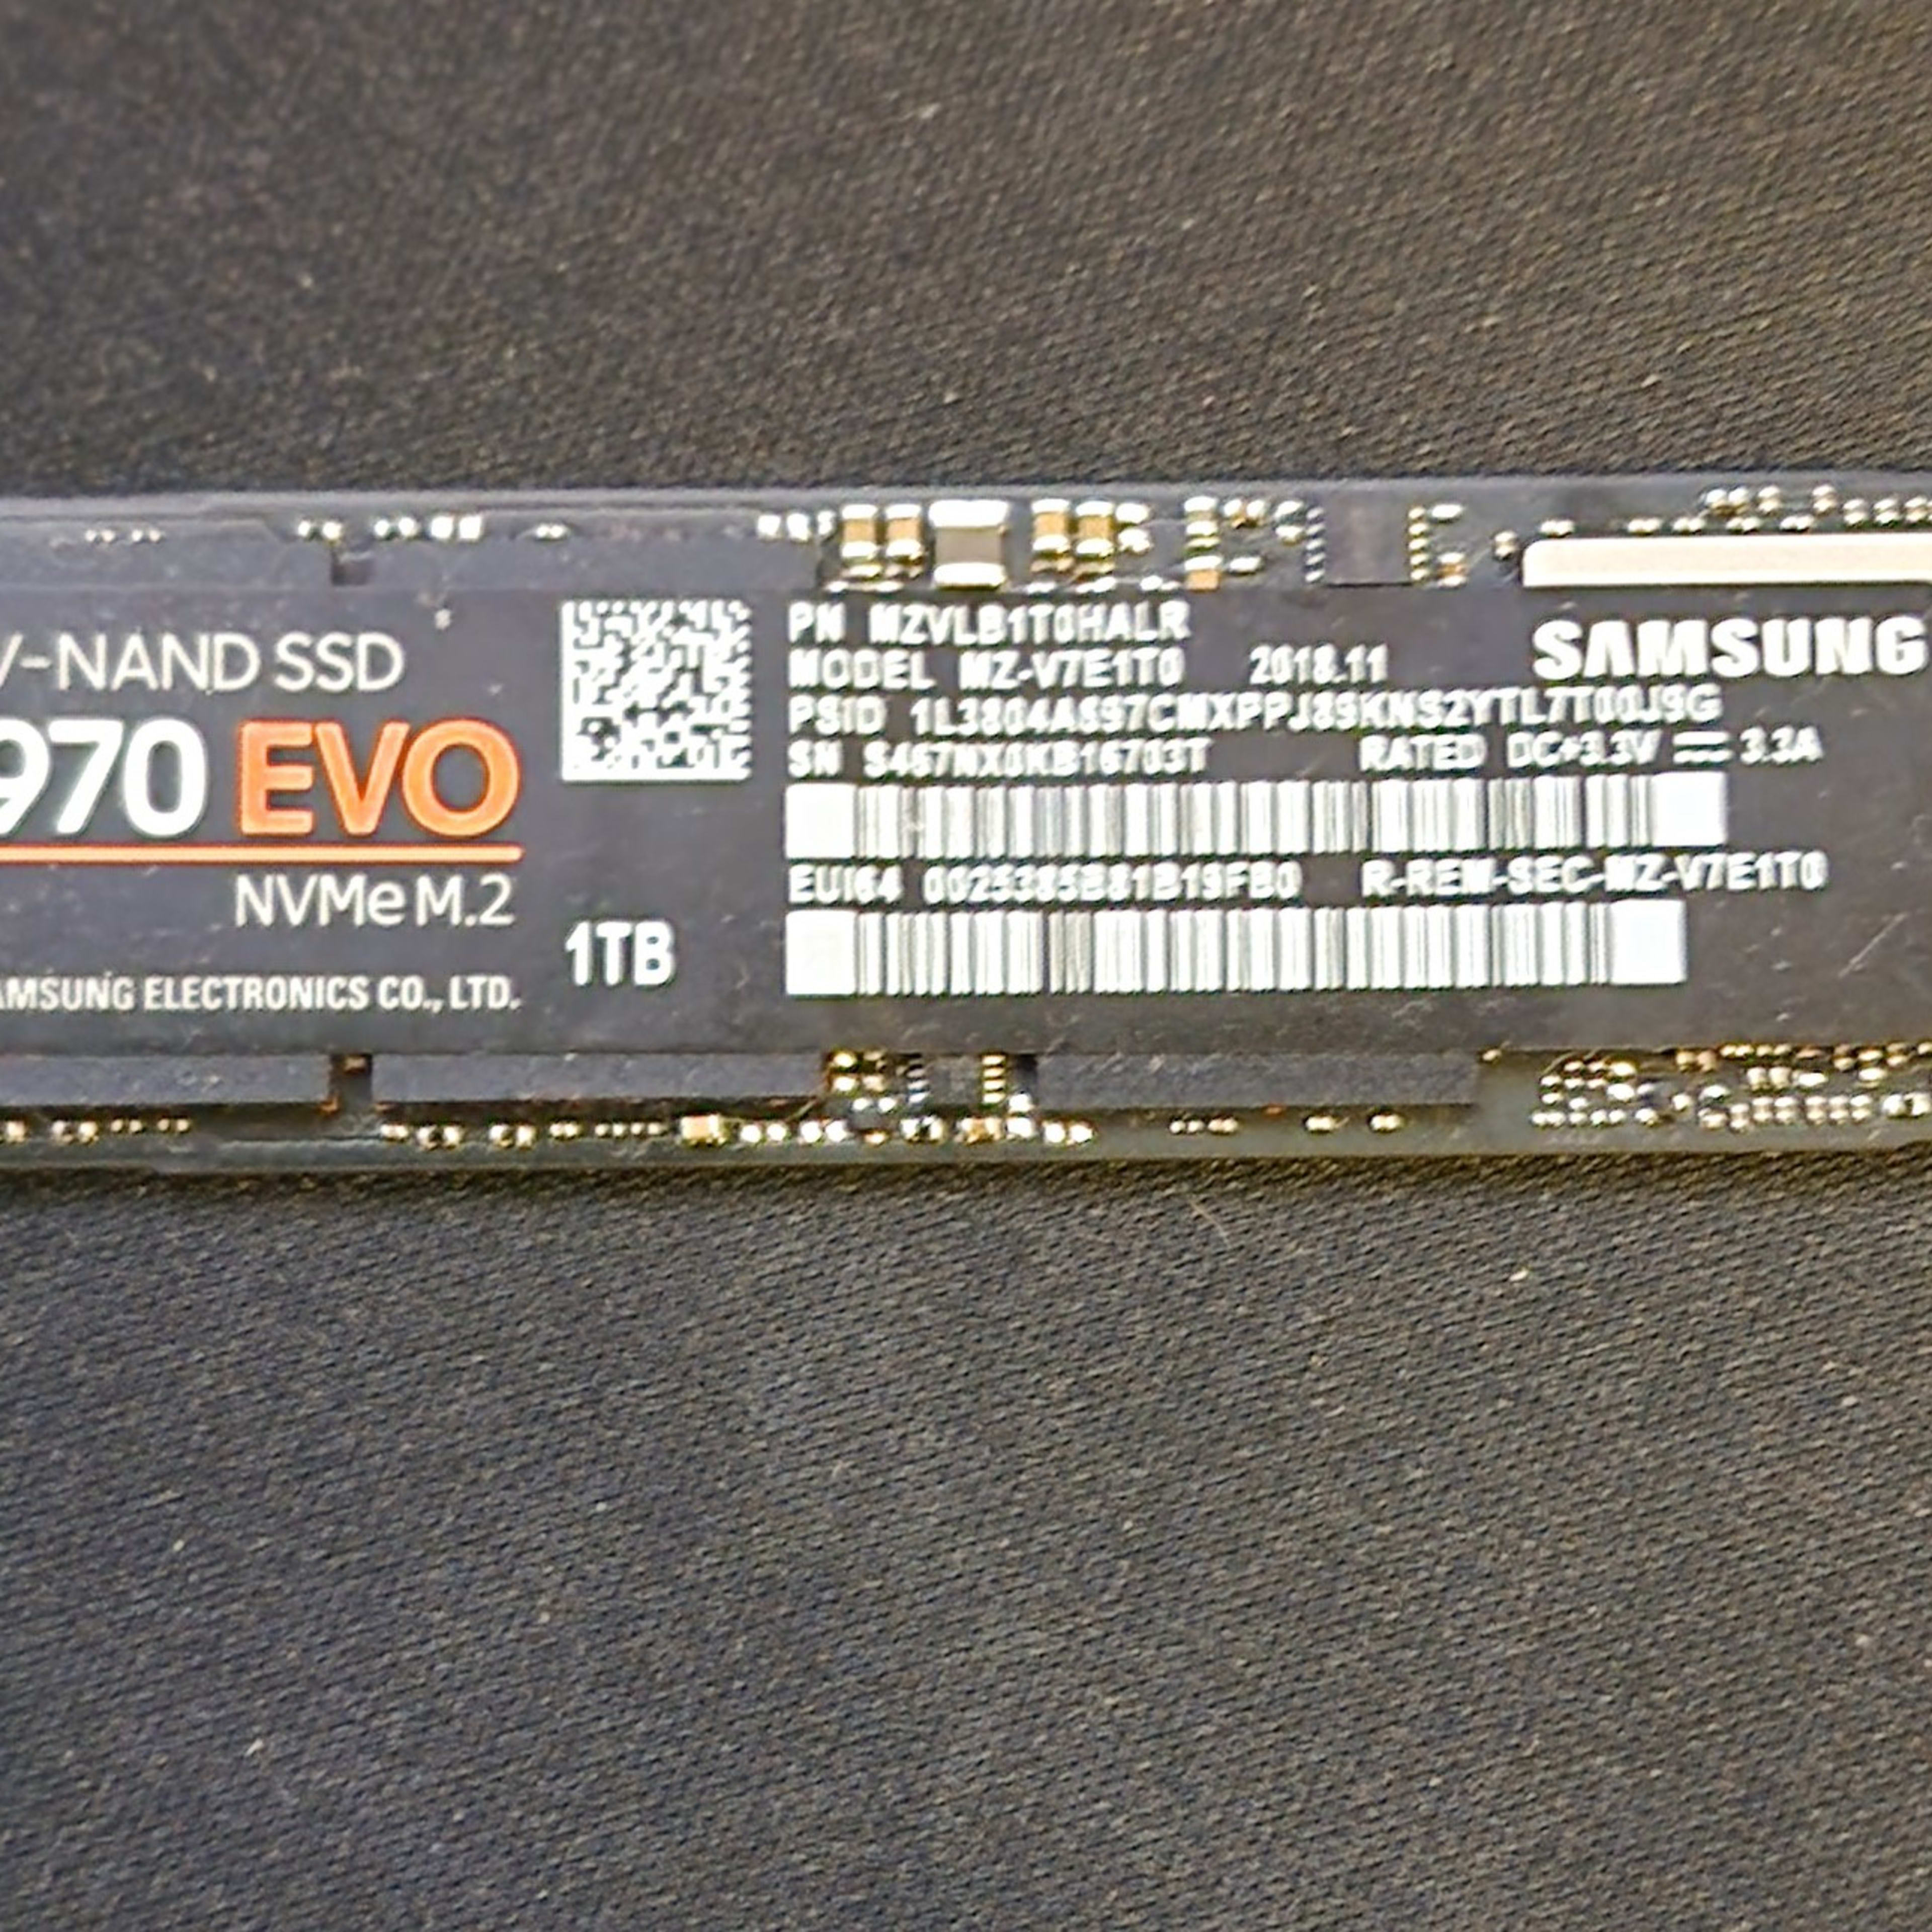 SAMSUNG 970 EVO SSD 1TB - M.2 NVMe